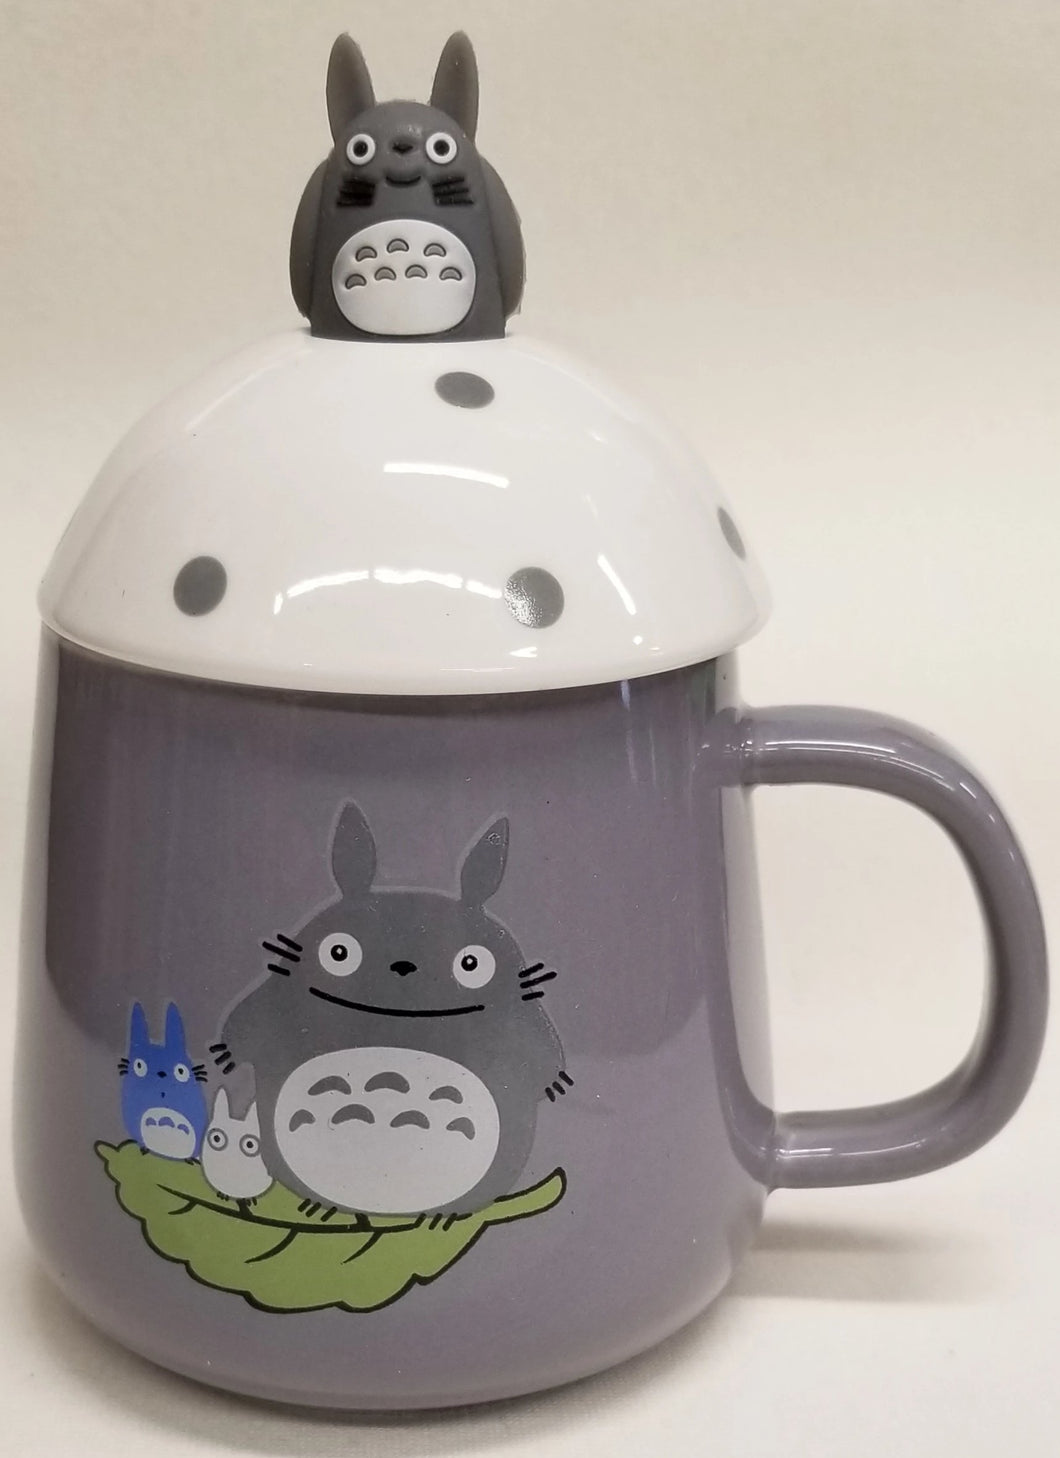 Totoro Ceramic Mug with Mushroom Top and Spoon